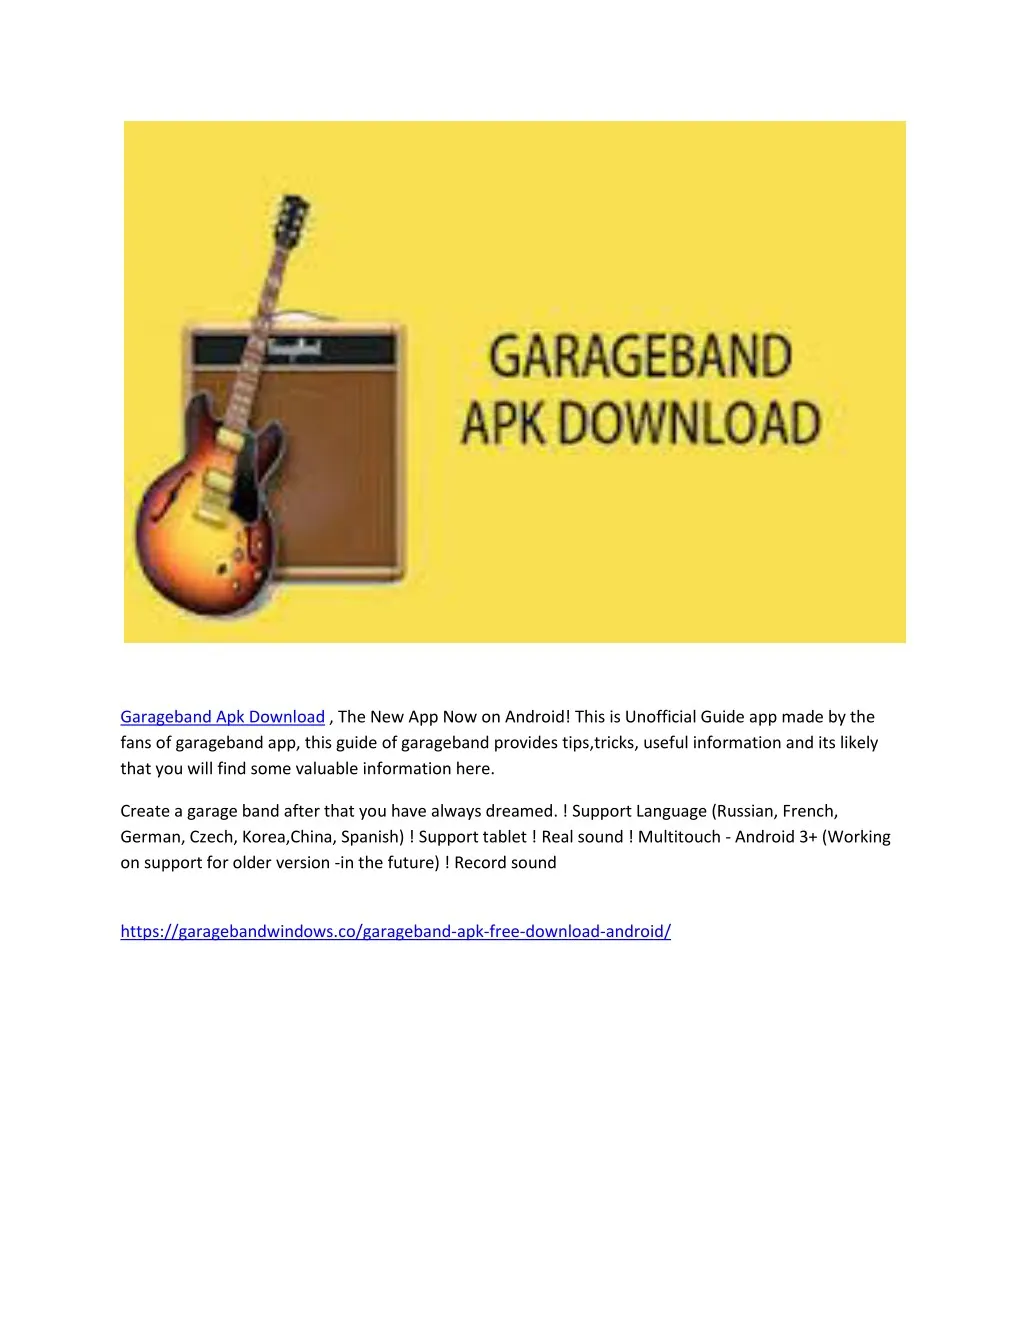 garageband apk download